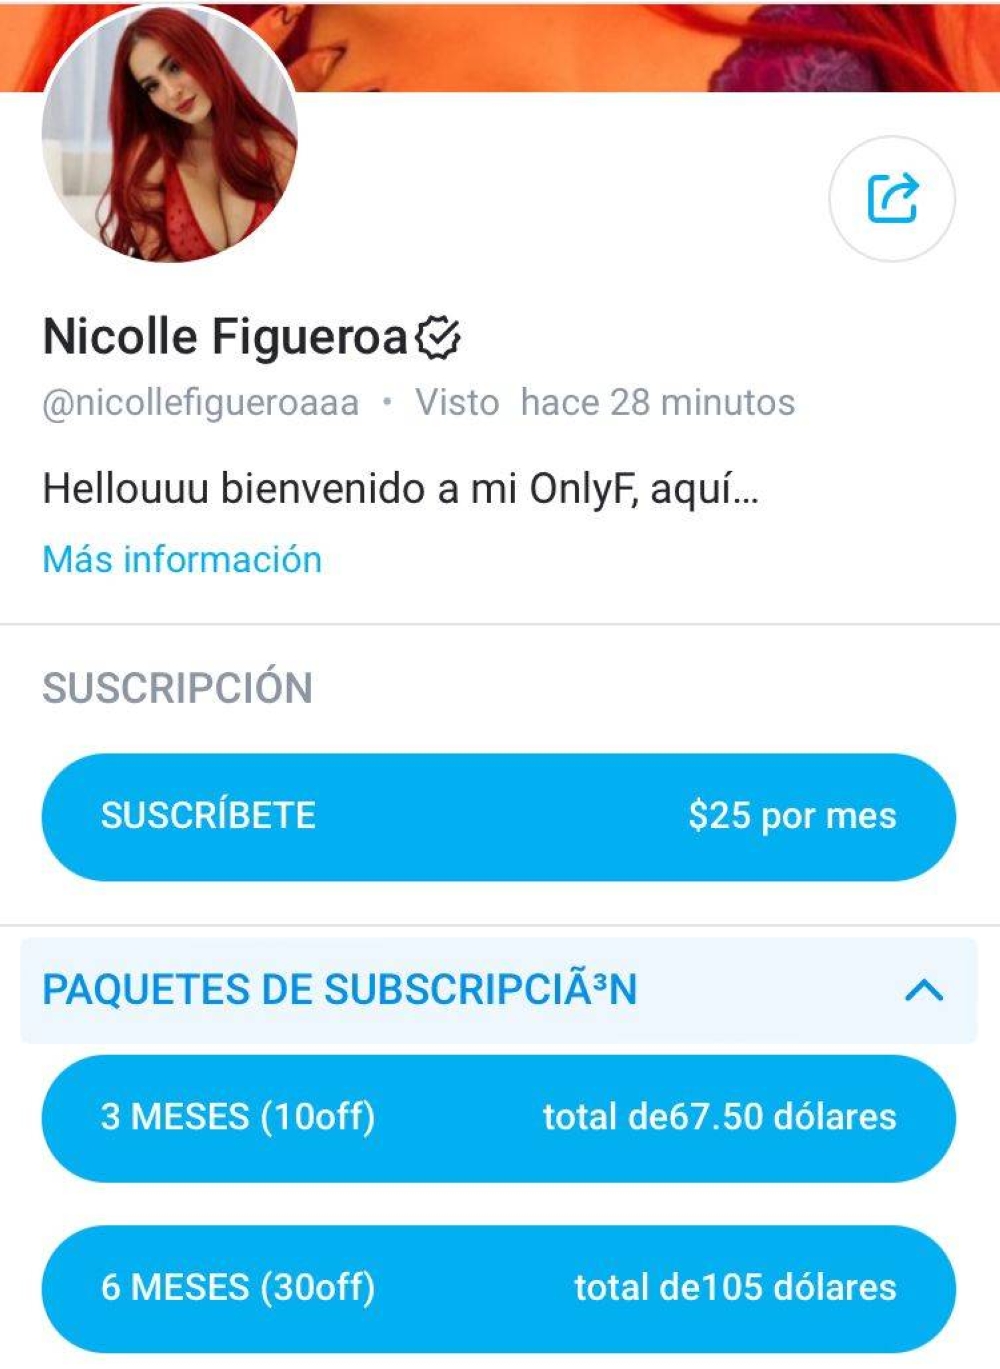 Nicolle figueroa only fans